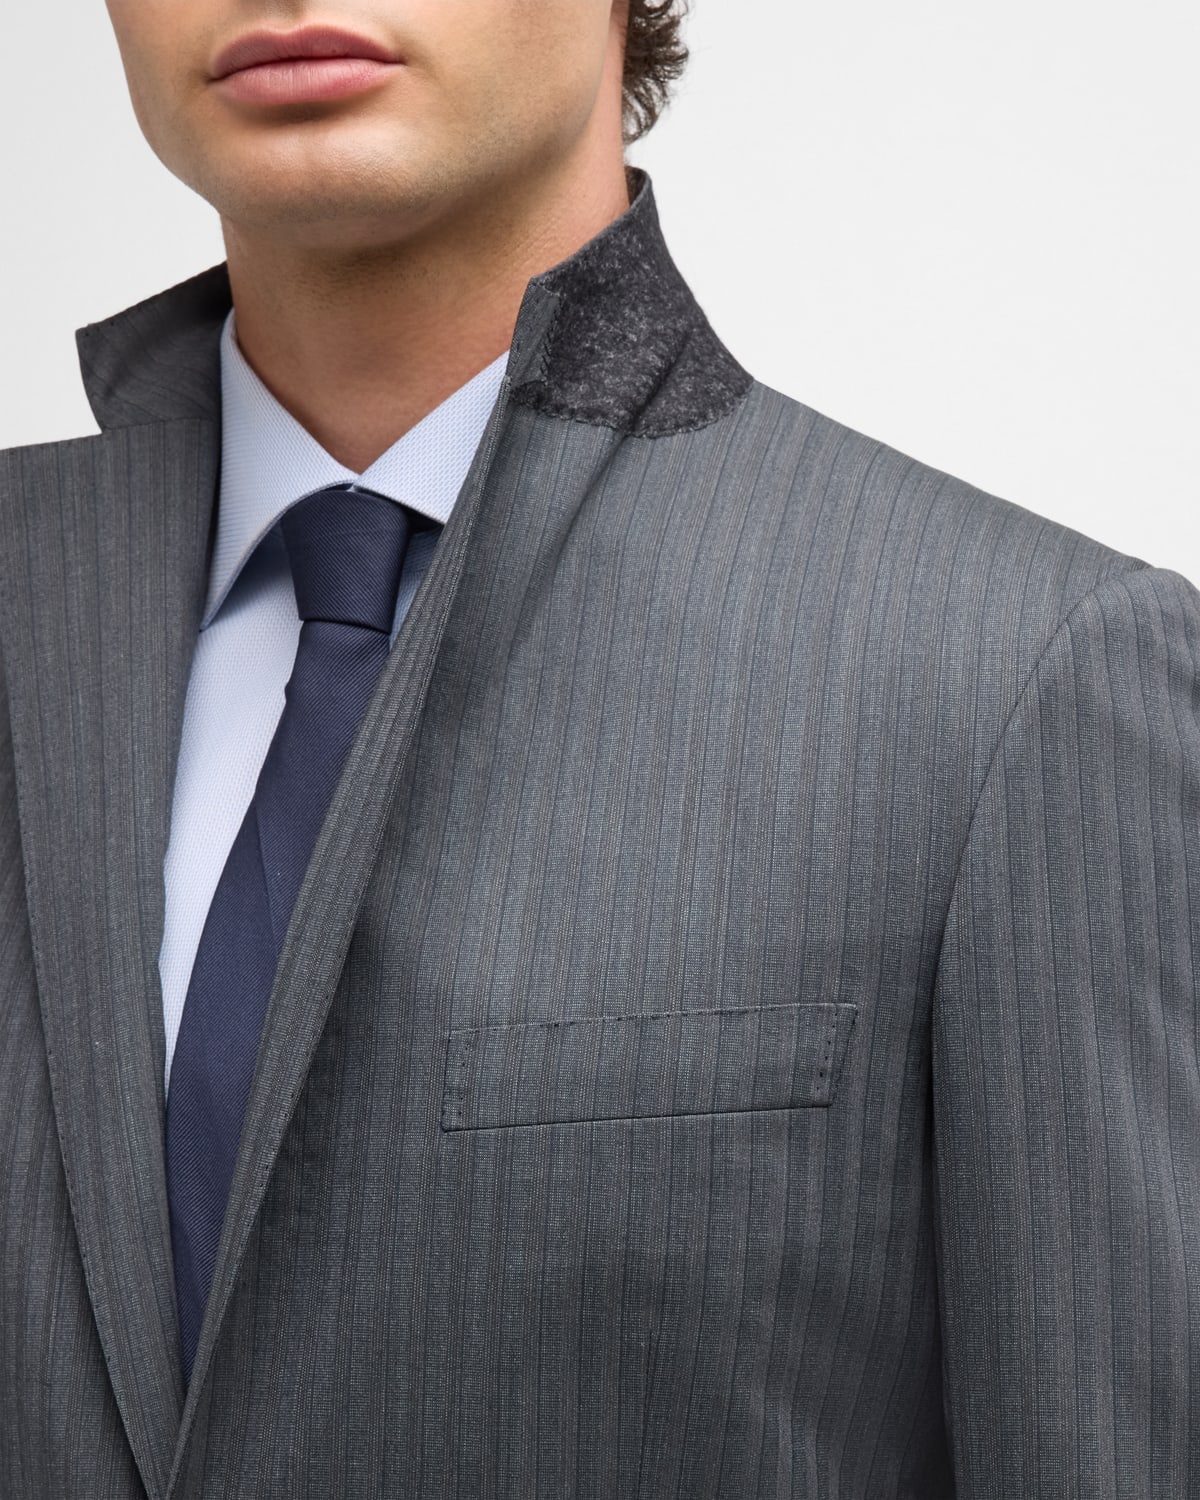 Men's Tonal Striped Wool Suit - 8